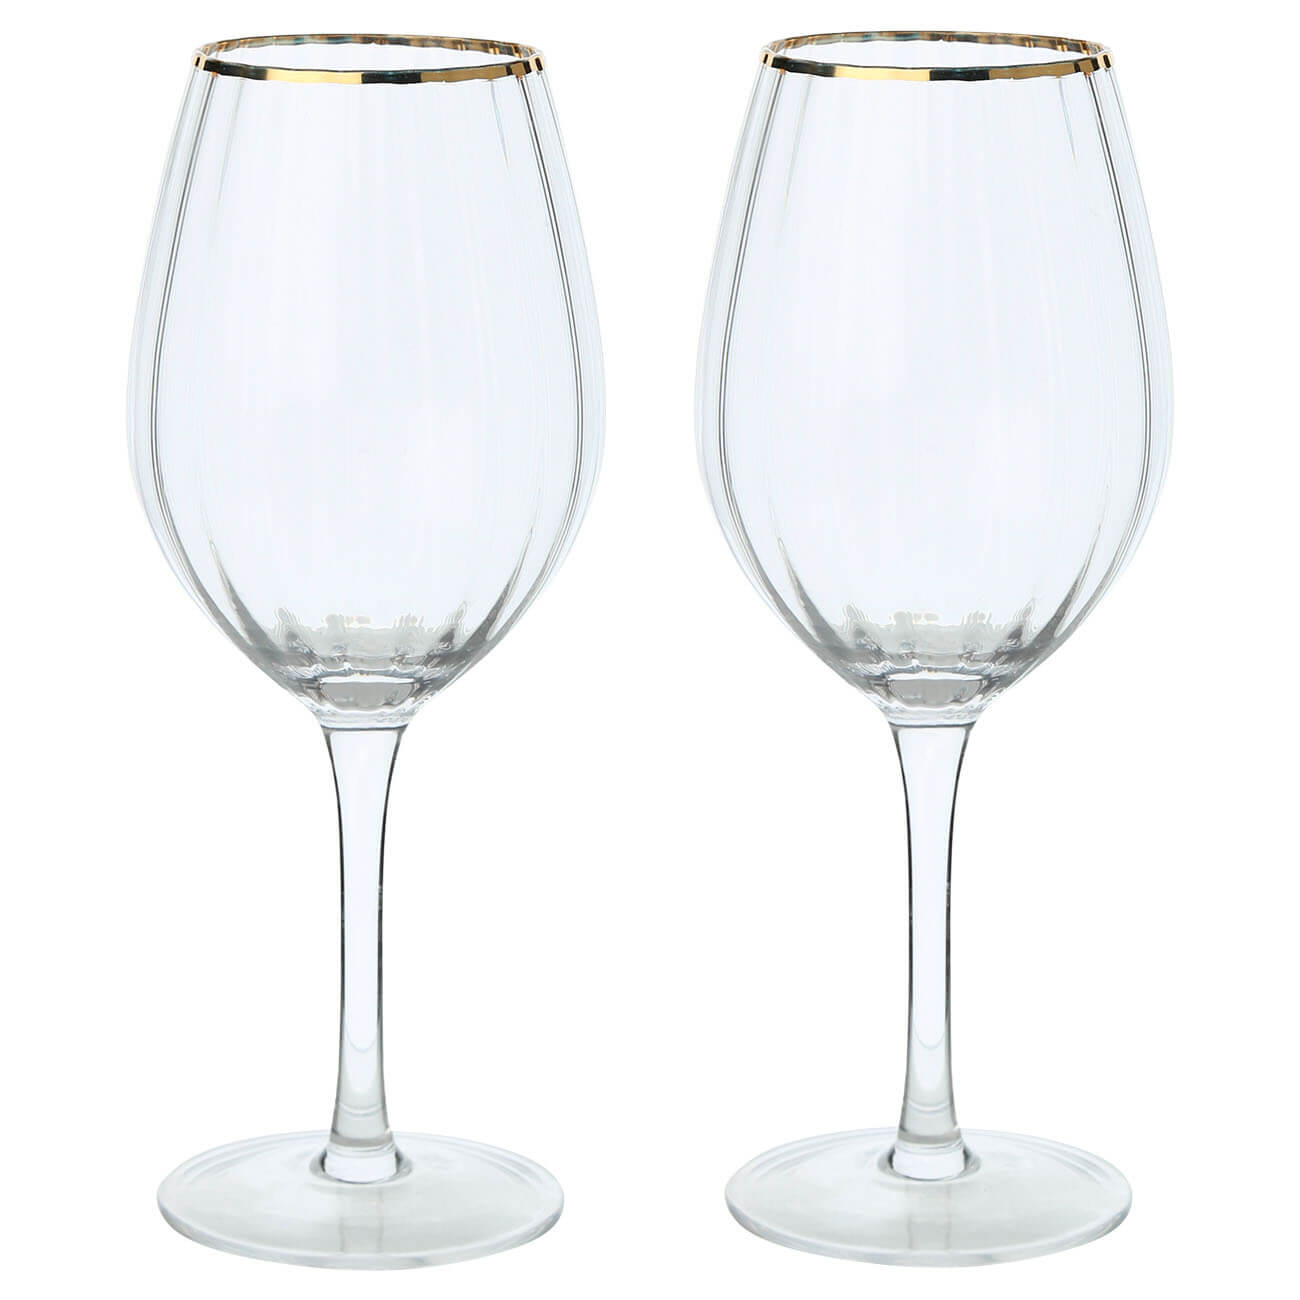 Бокал для вина, 530 мл, 2 шт, стекло, с золотистым кантом, Lombardy R Gold стакан 340 мл стекло р с золотистым кантом rhomb gold